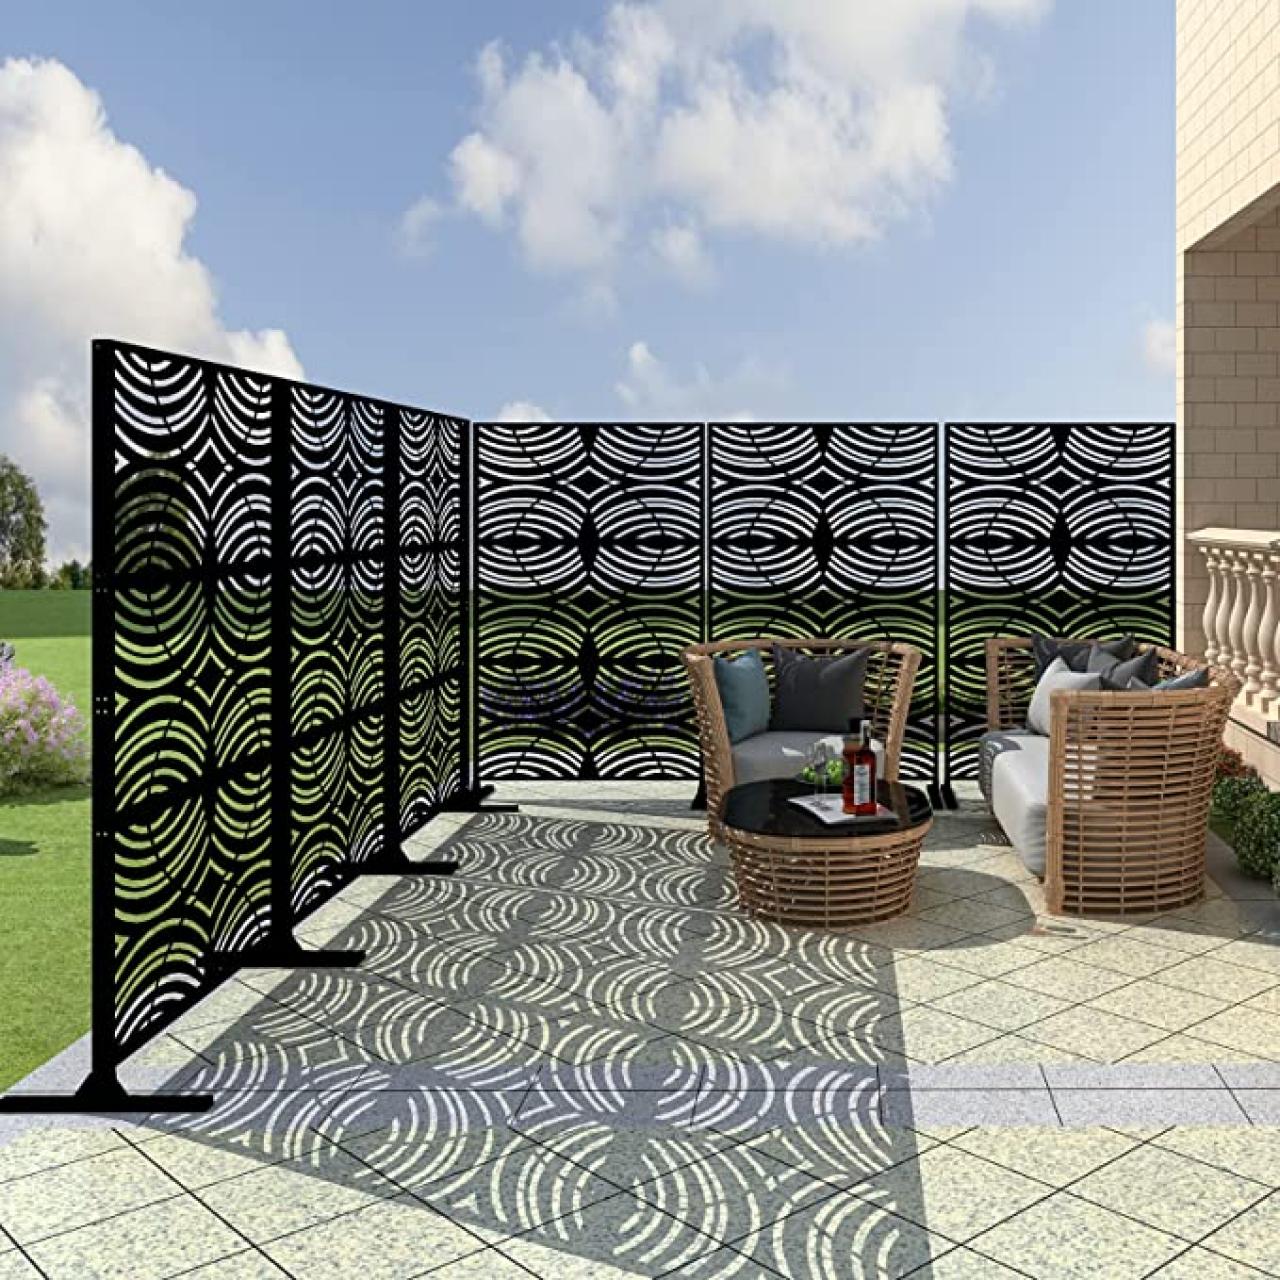 Honeysuckle Soft Sage Decorative Garden Screen - 1800 x 900mm | Wickes.co.uk